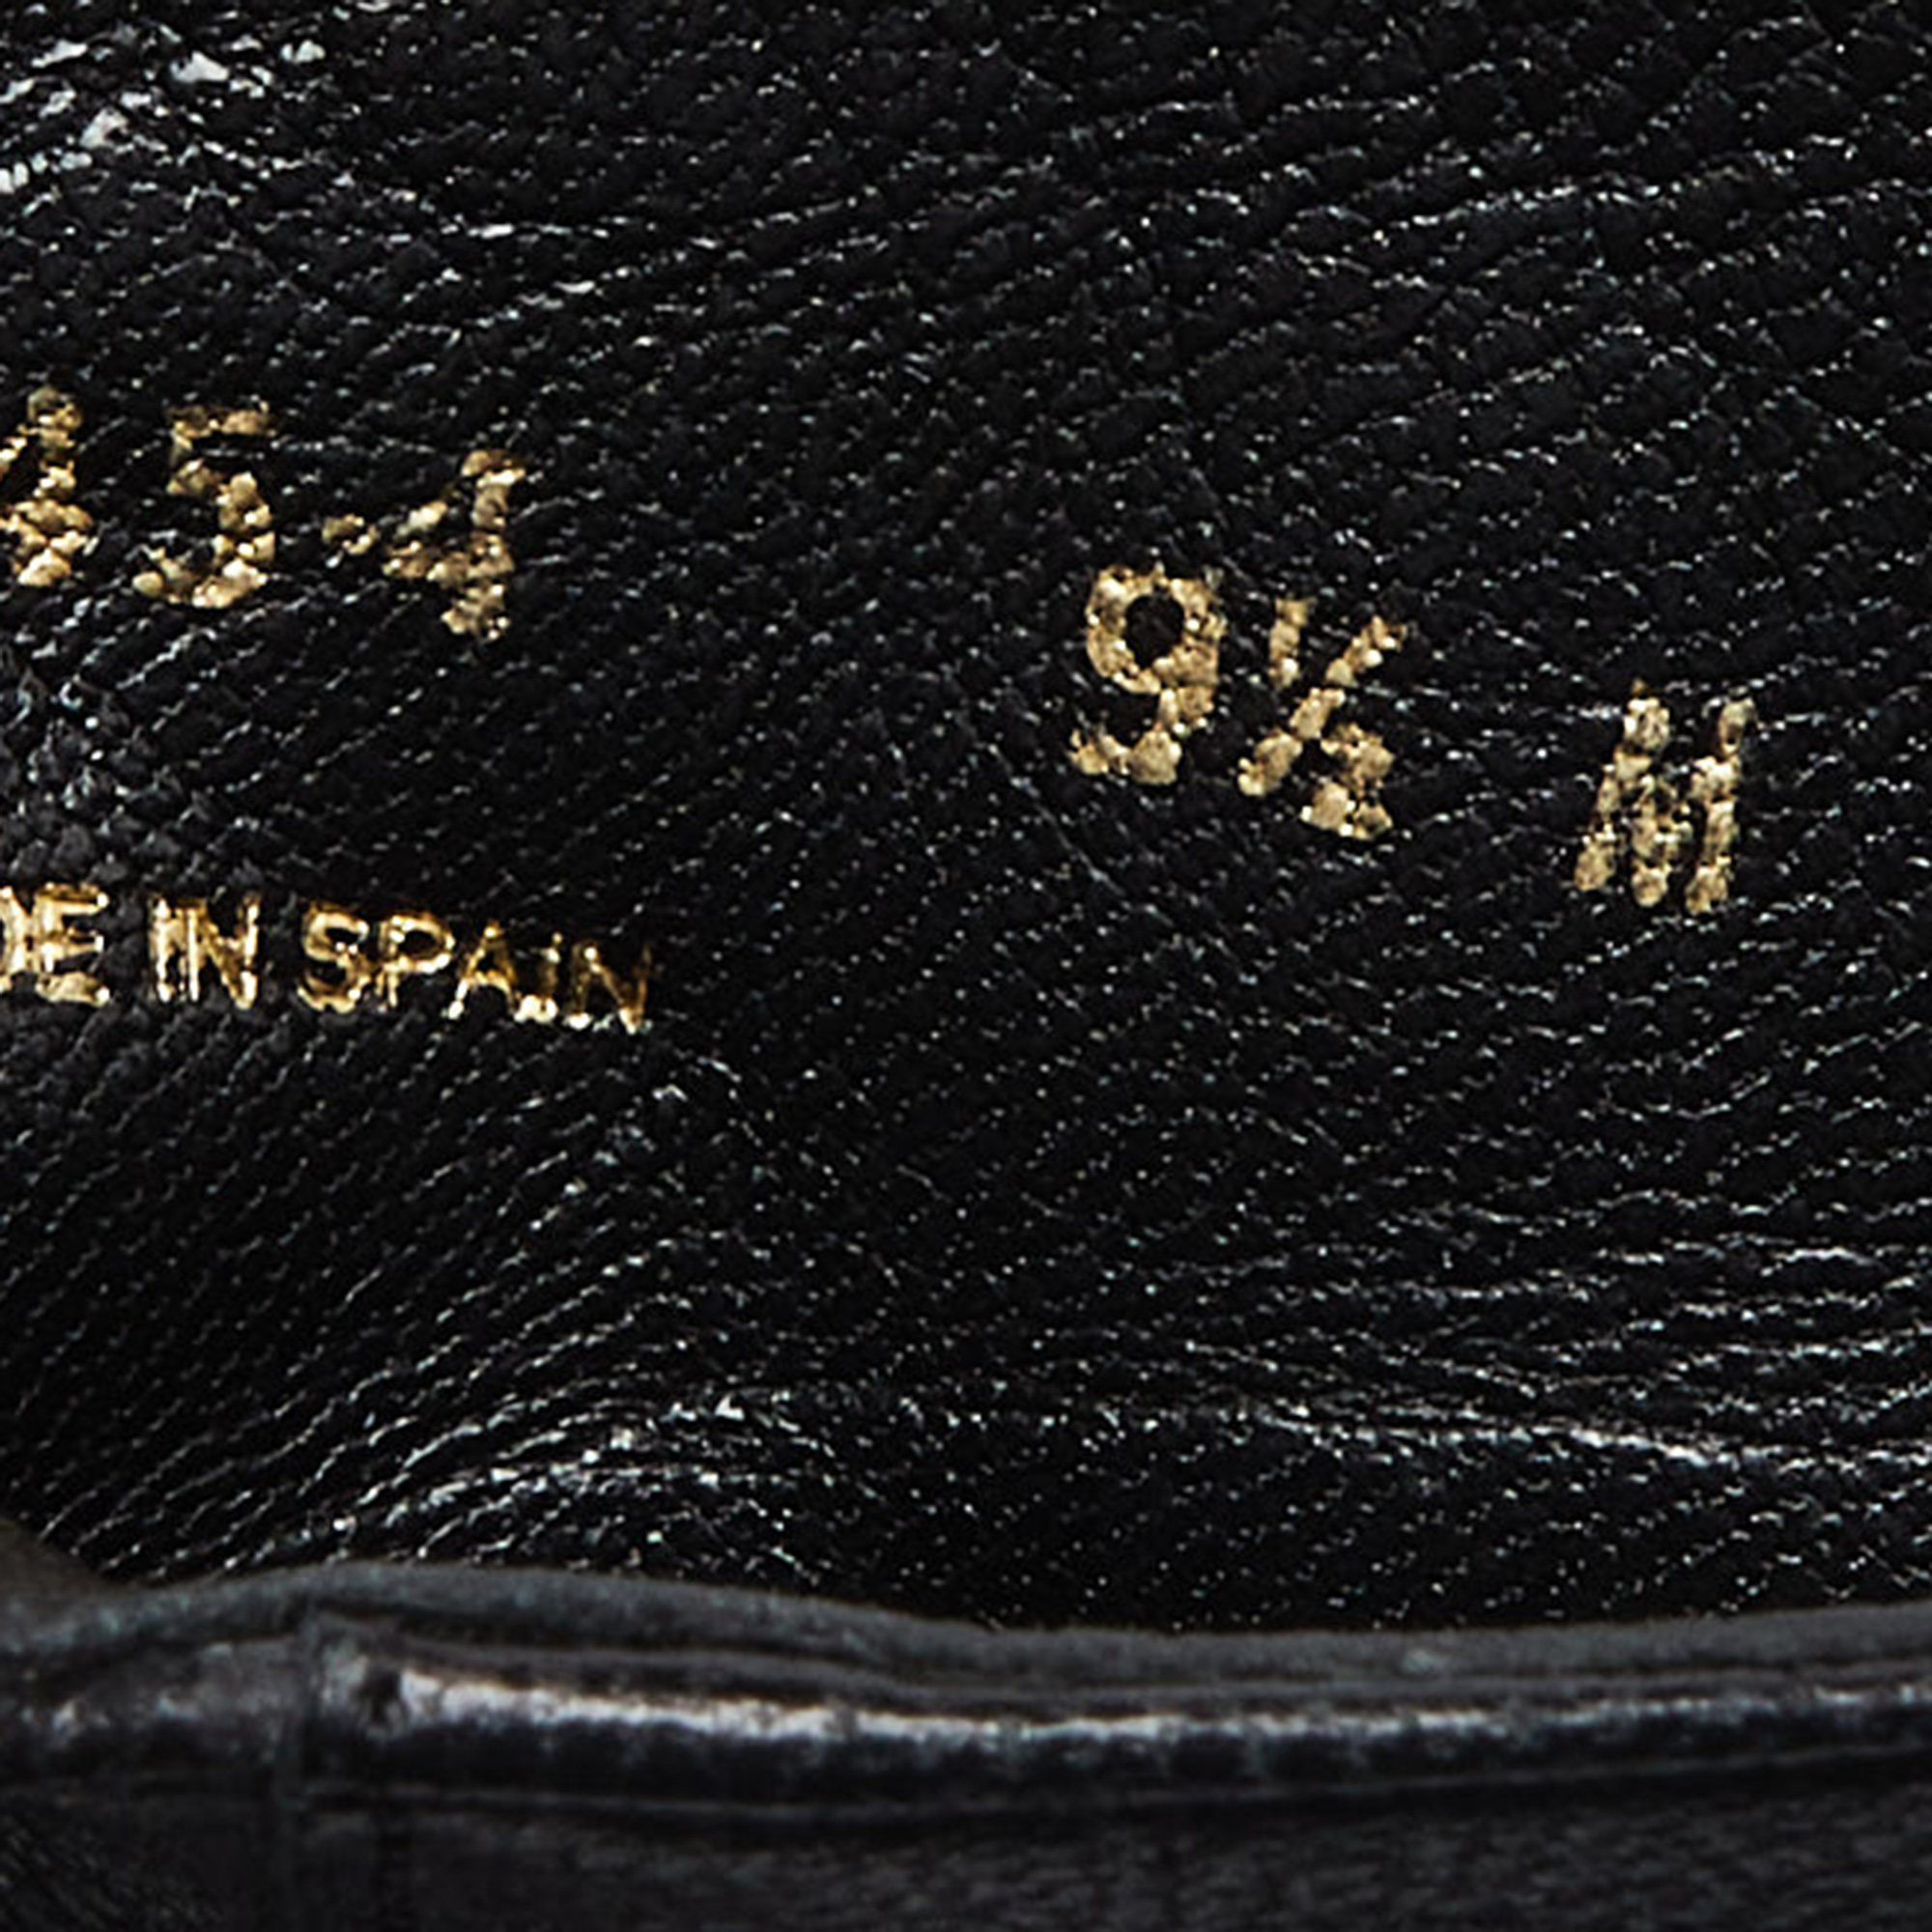 Stuart Weitzman Black Leather Ankle Boots Size 40